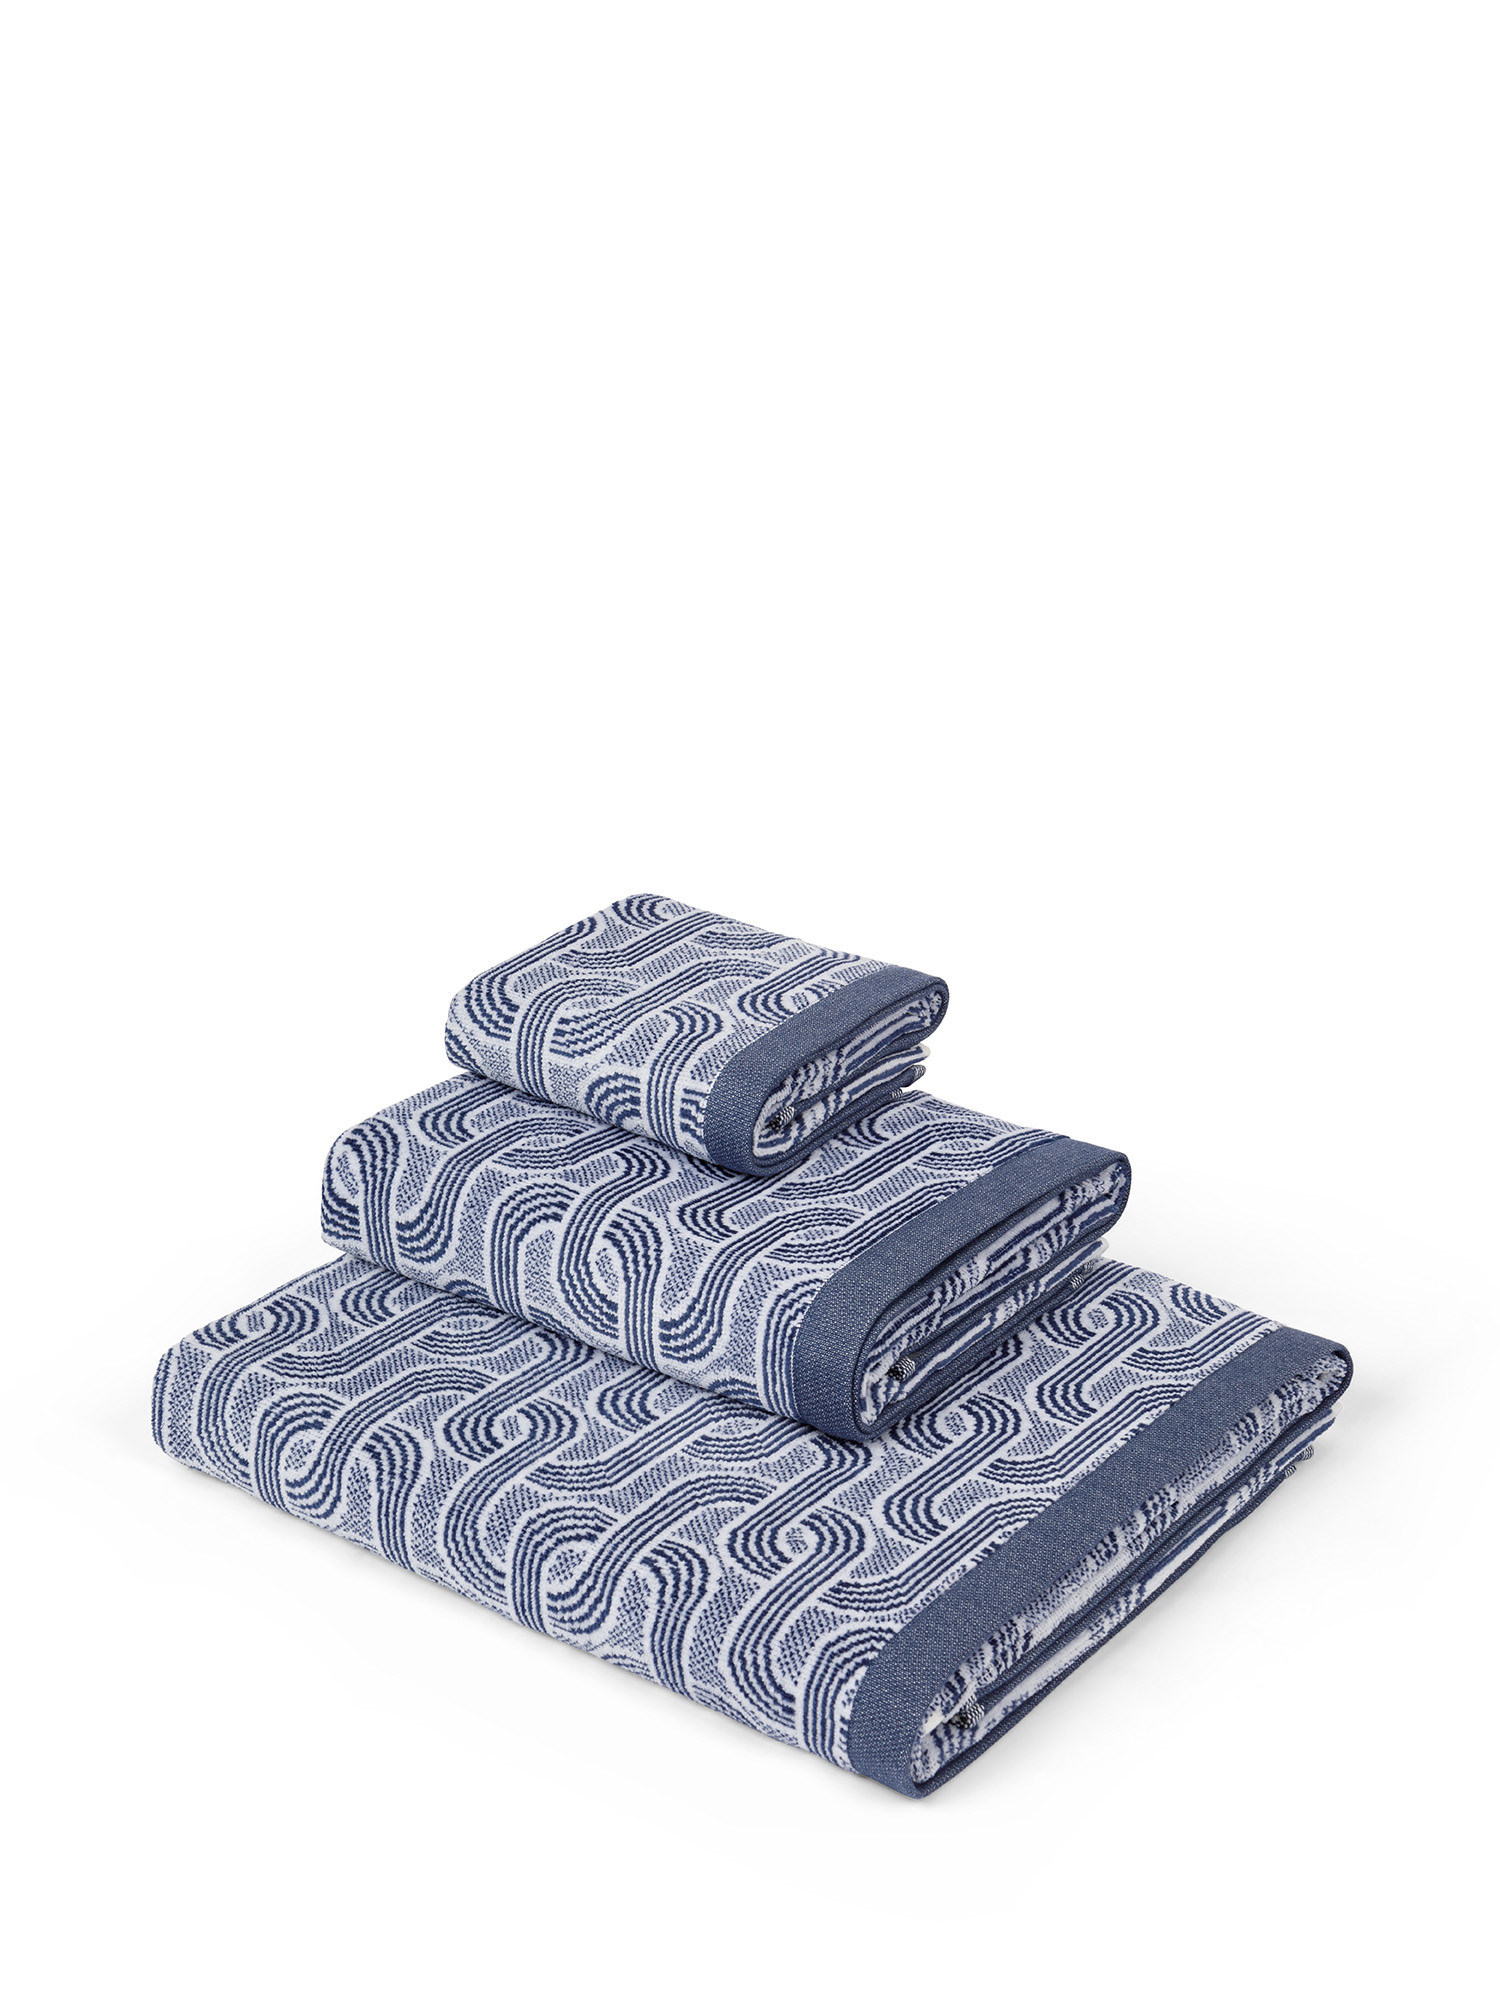 Asciugamano cotone velour motivo catene, Blu, large image number 0